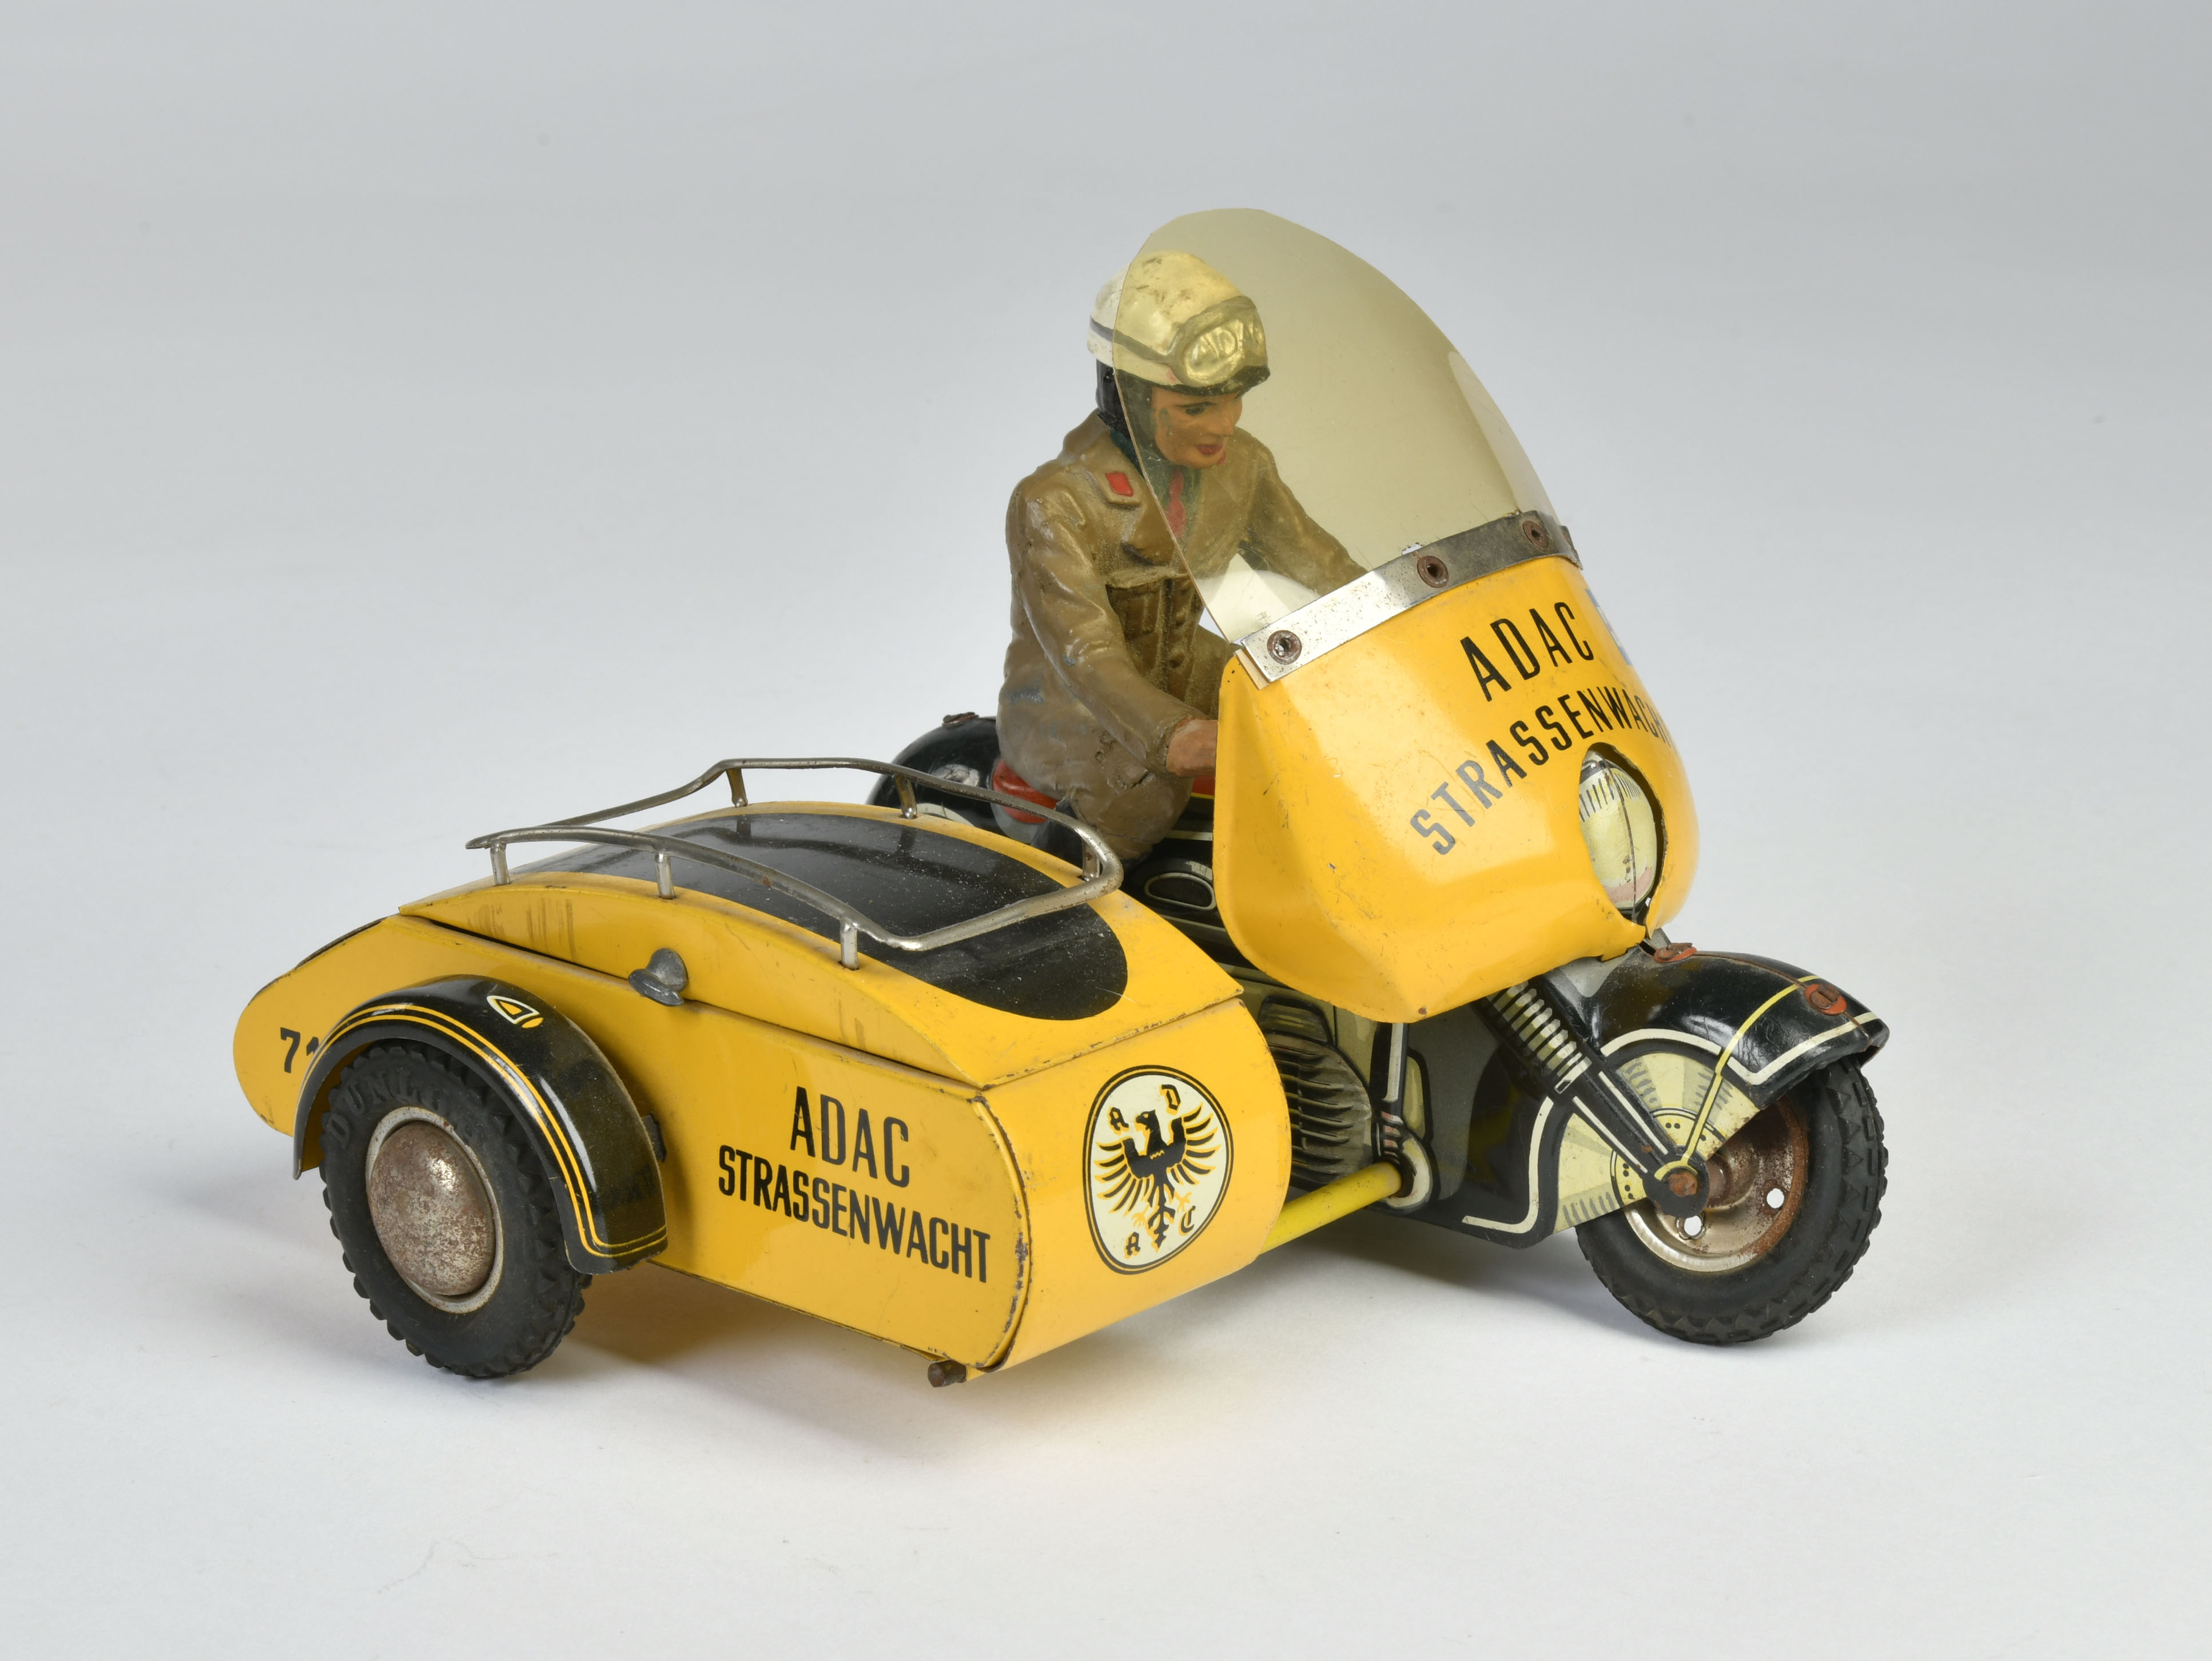 Göso, ADAC Straßenwacht motorcycle with sidecar, W.-Germany, 19 cm, tin, friction ok, paint d., C